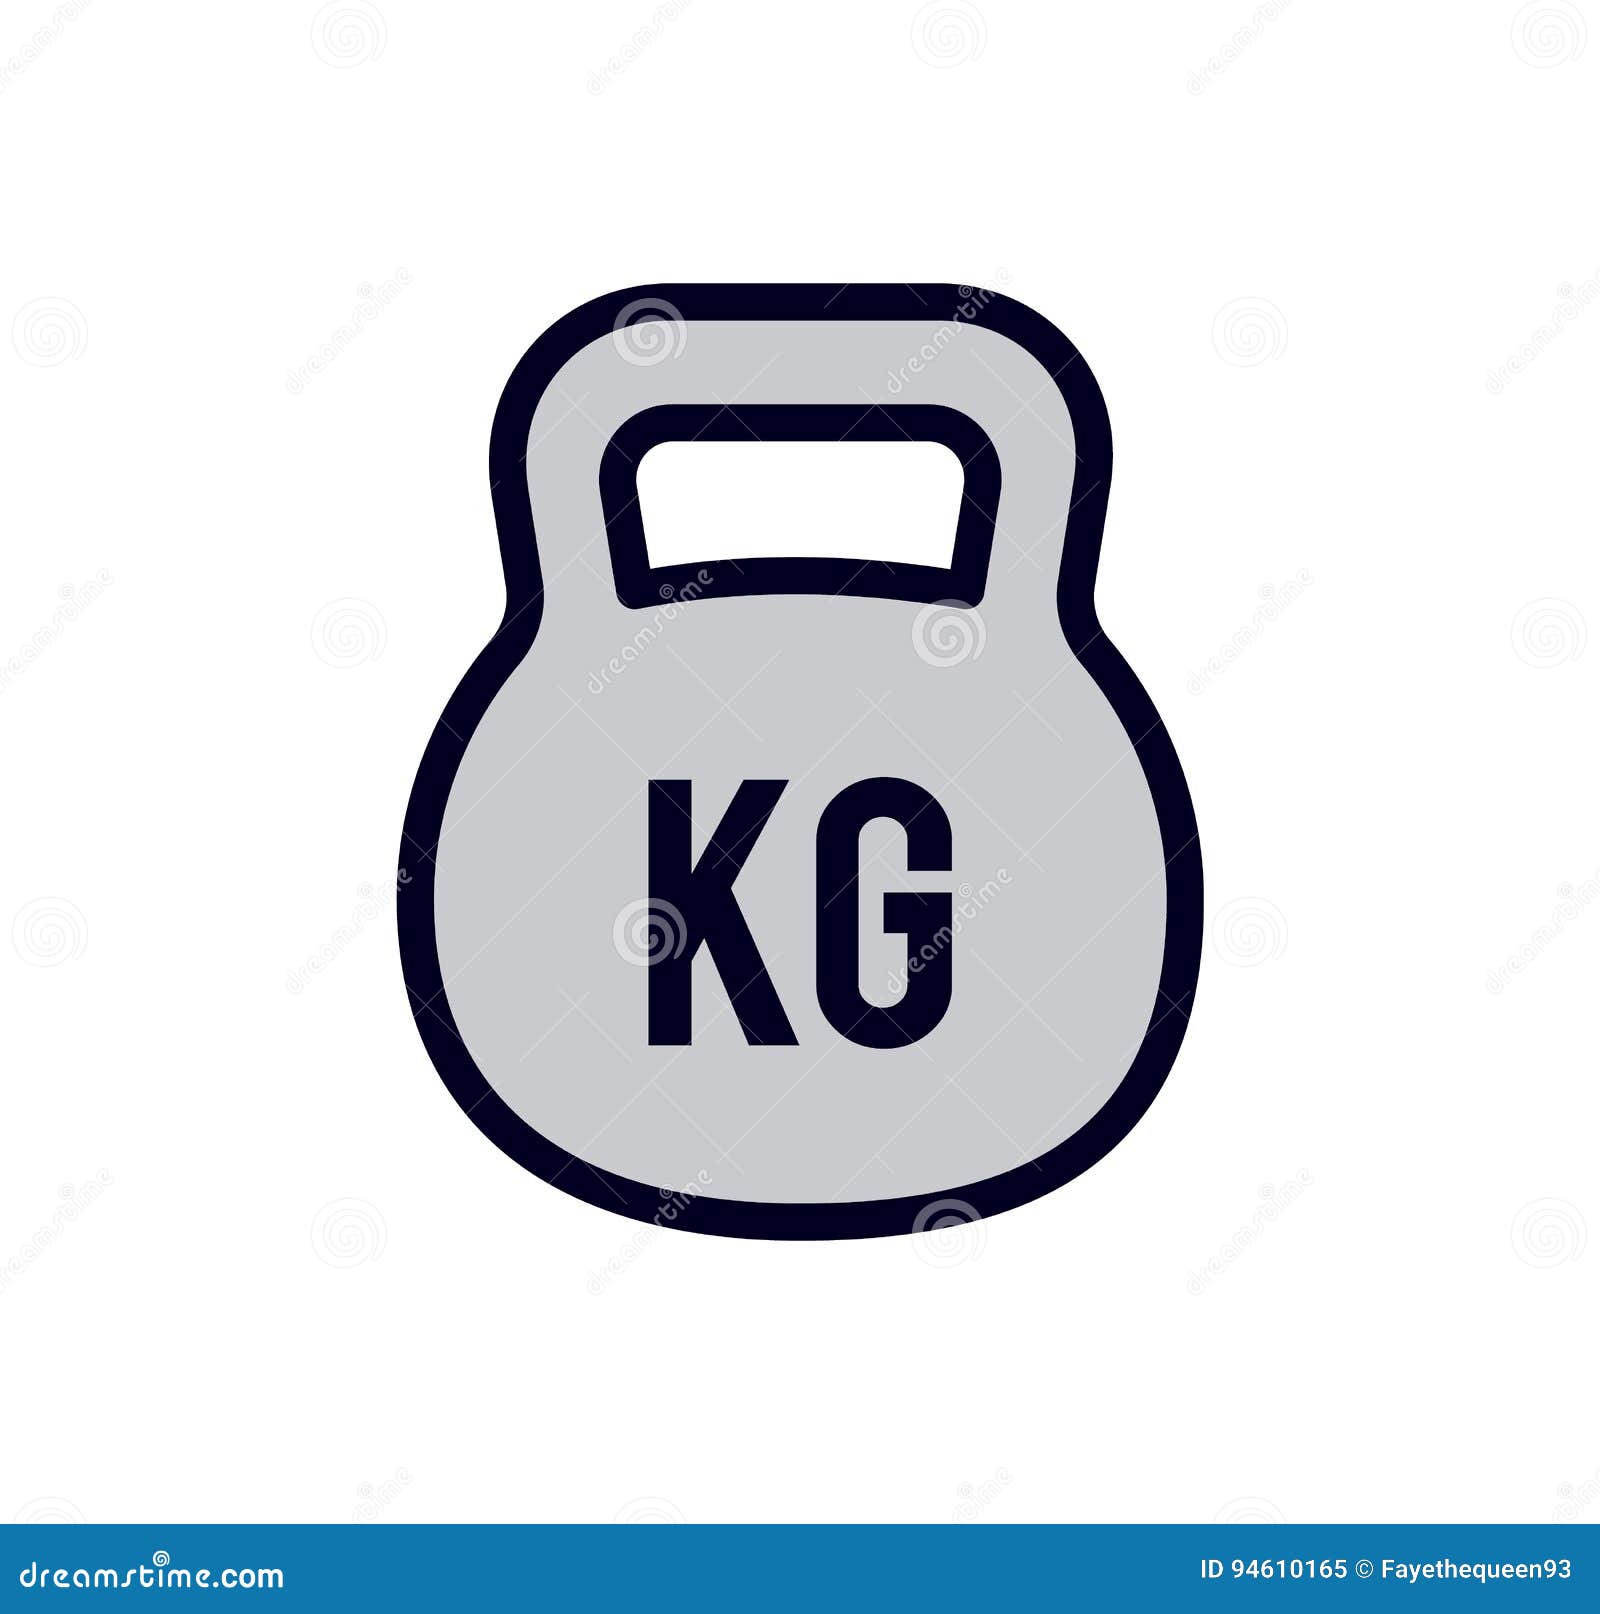 weight kilogram icon. weight kilogram  on white background.